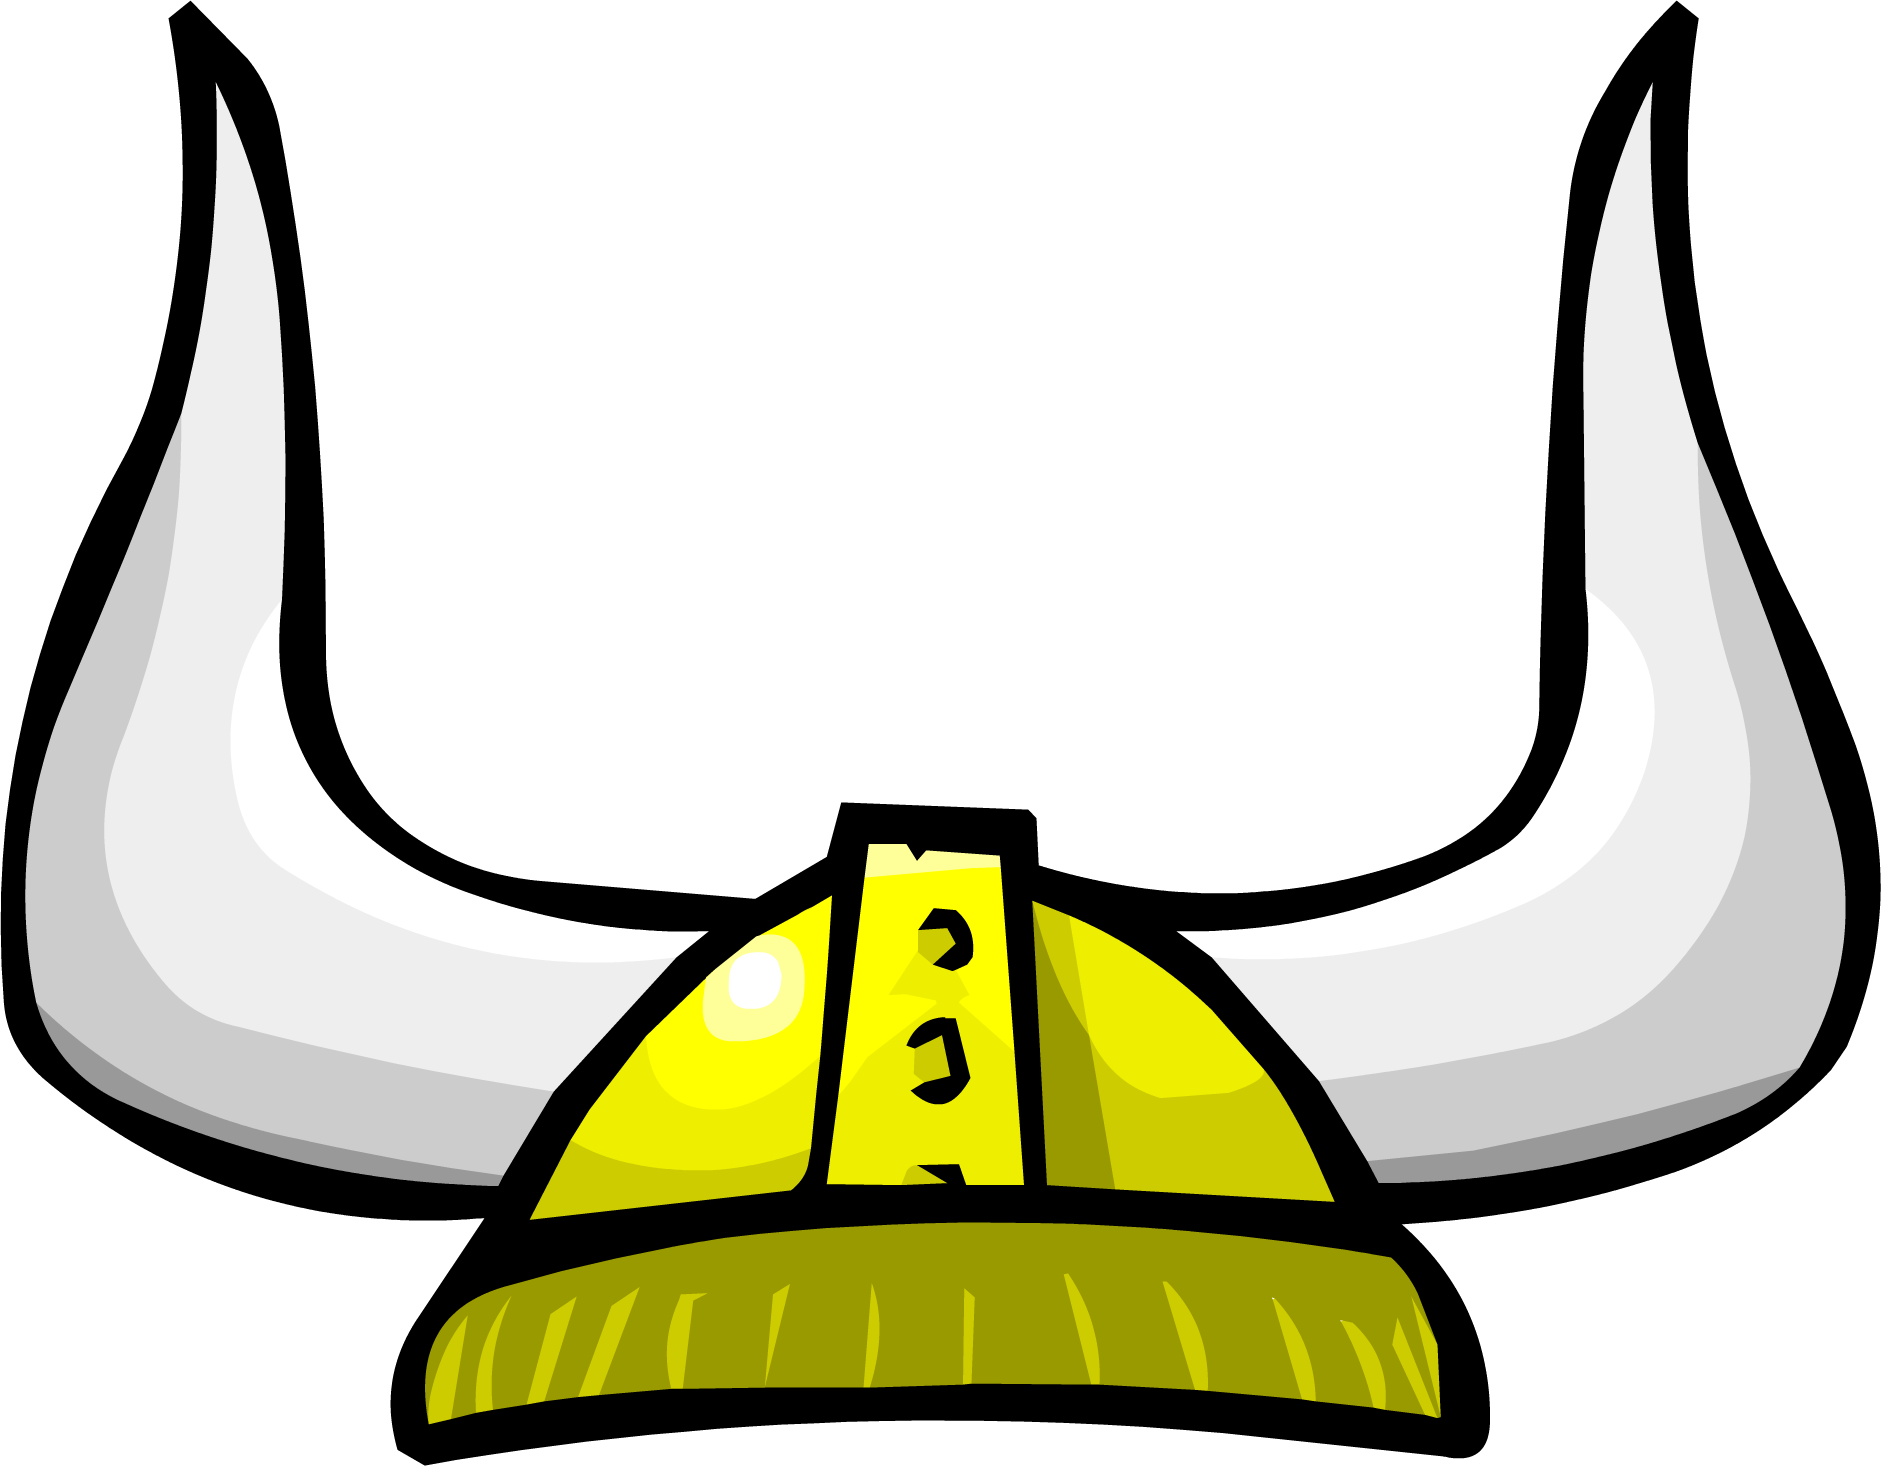 Gold Viking Helmet - Club Penguin Wiki - The free, editable ...